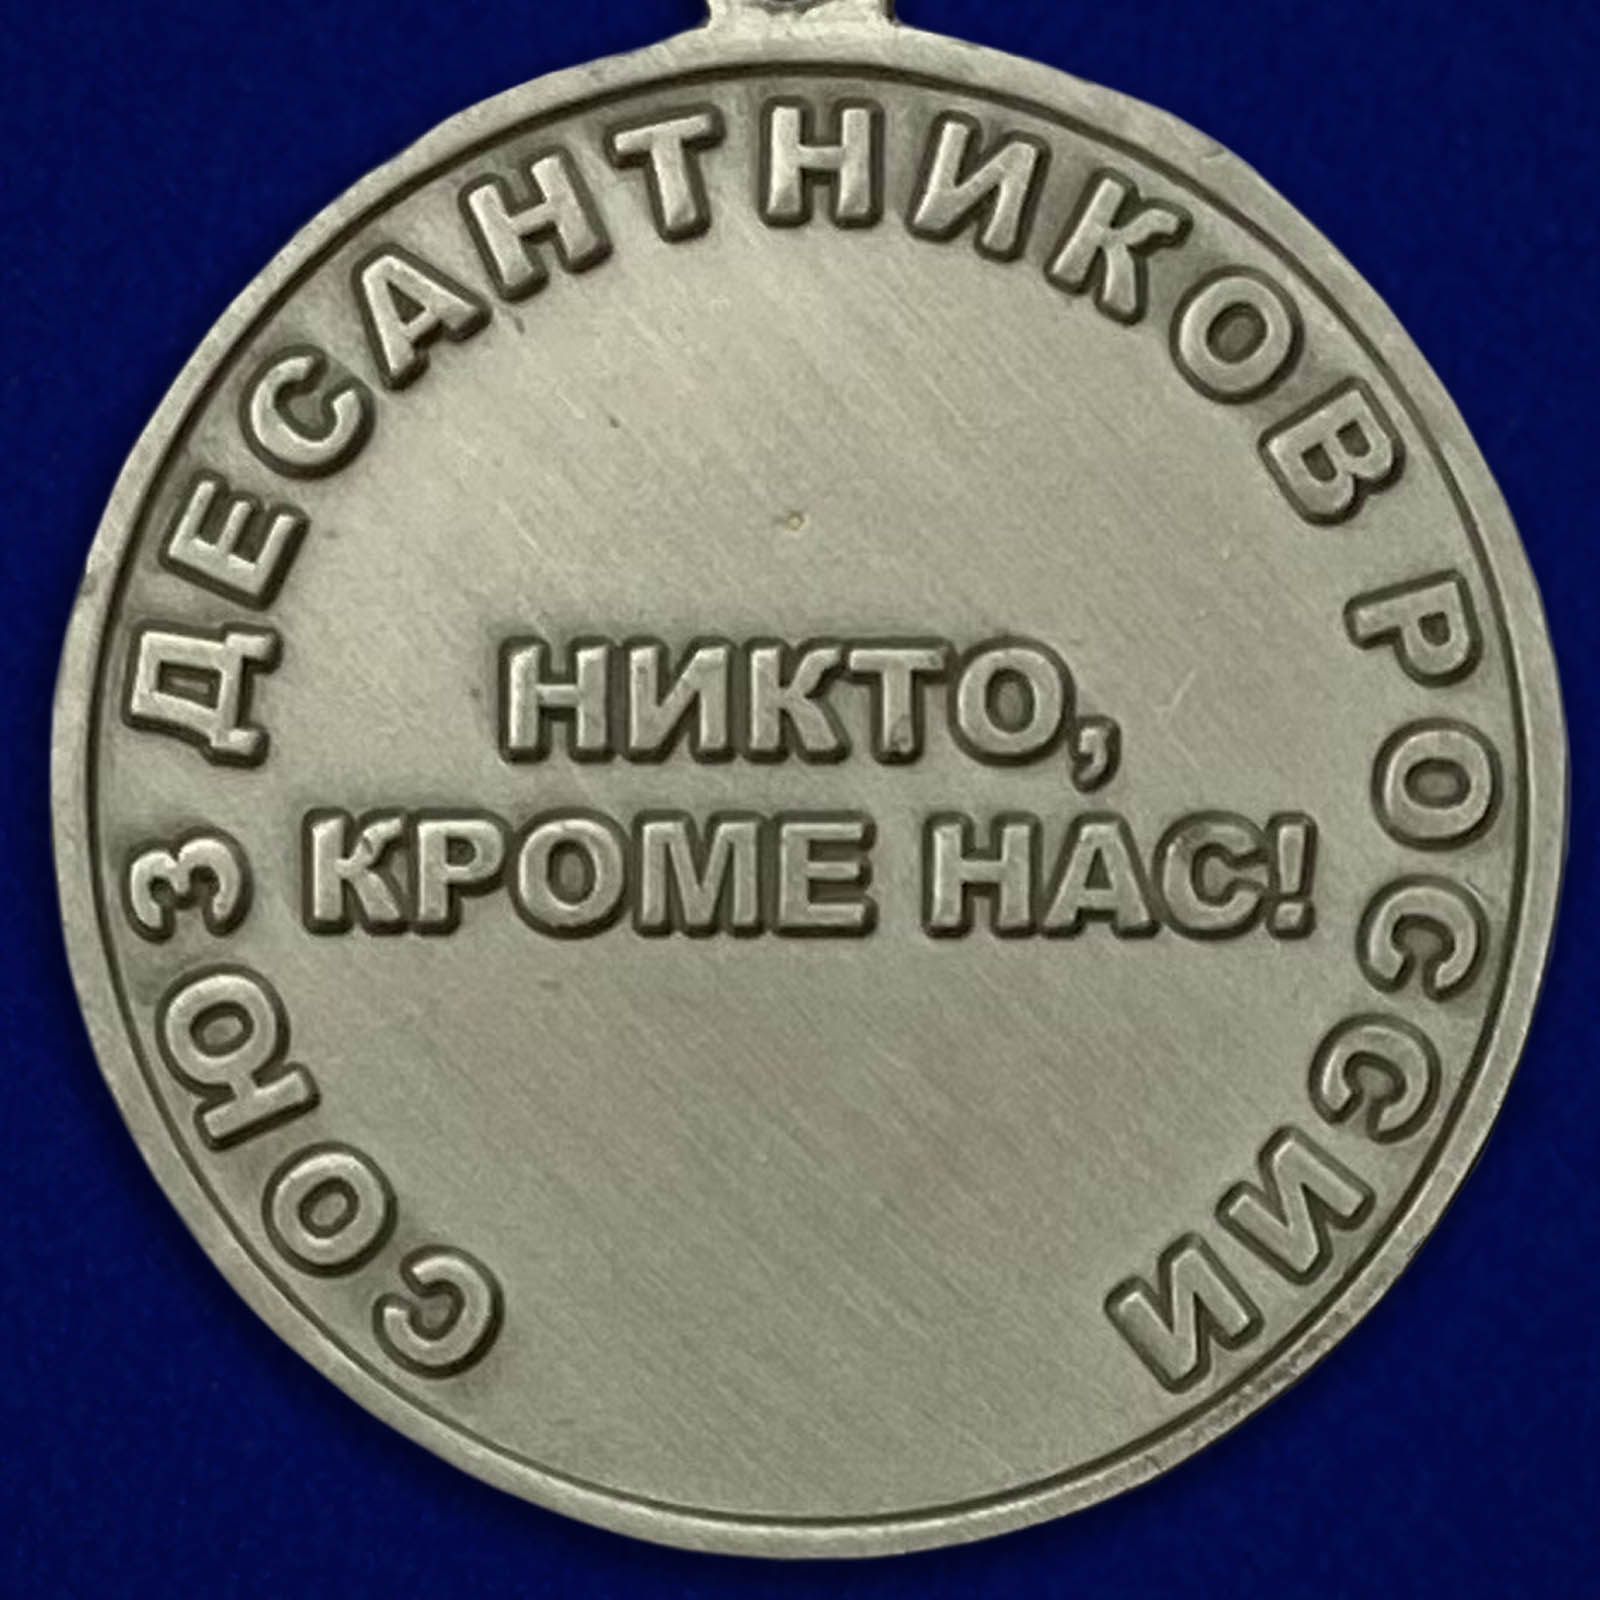 Медаль Маргелова